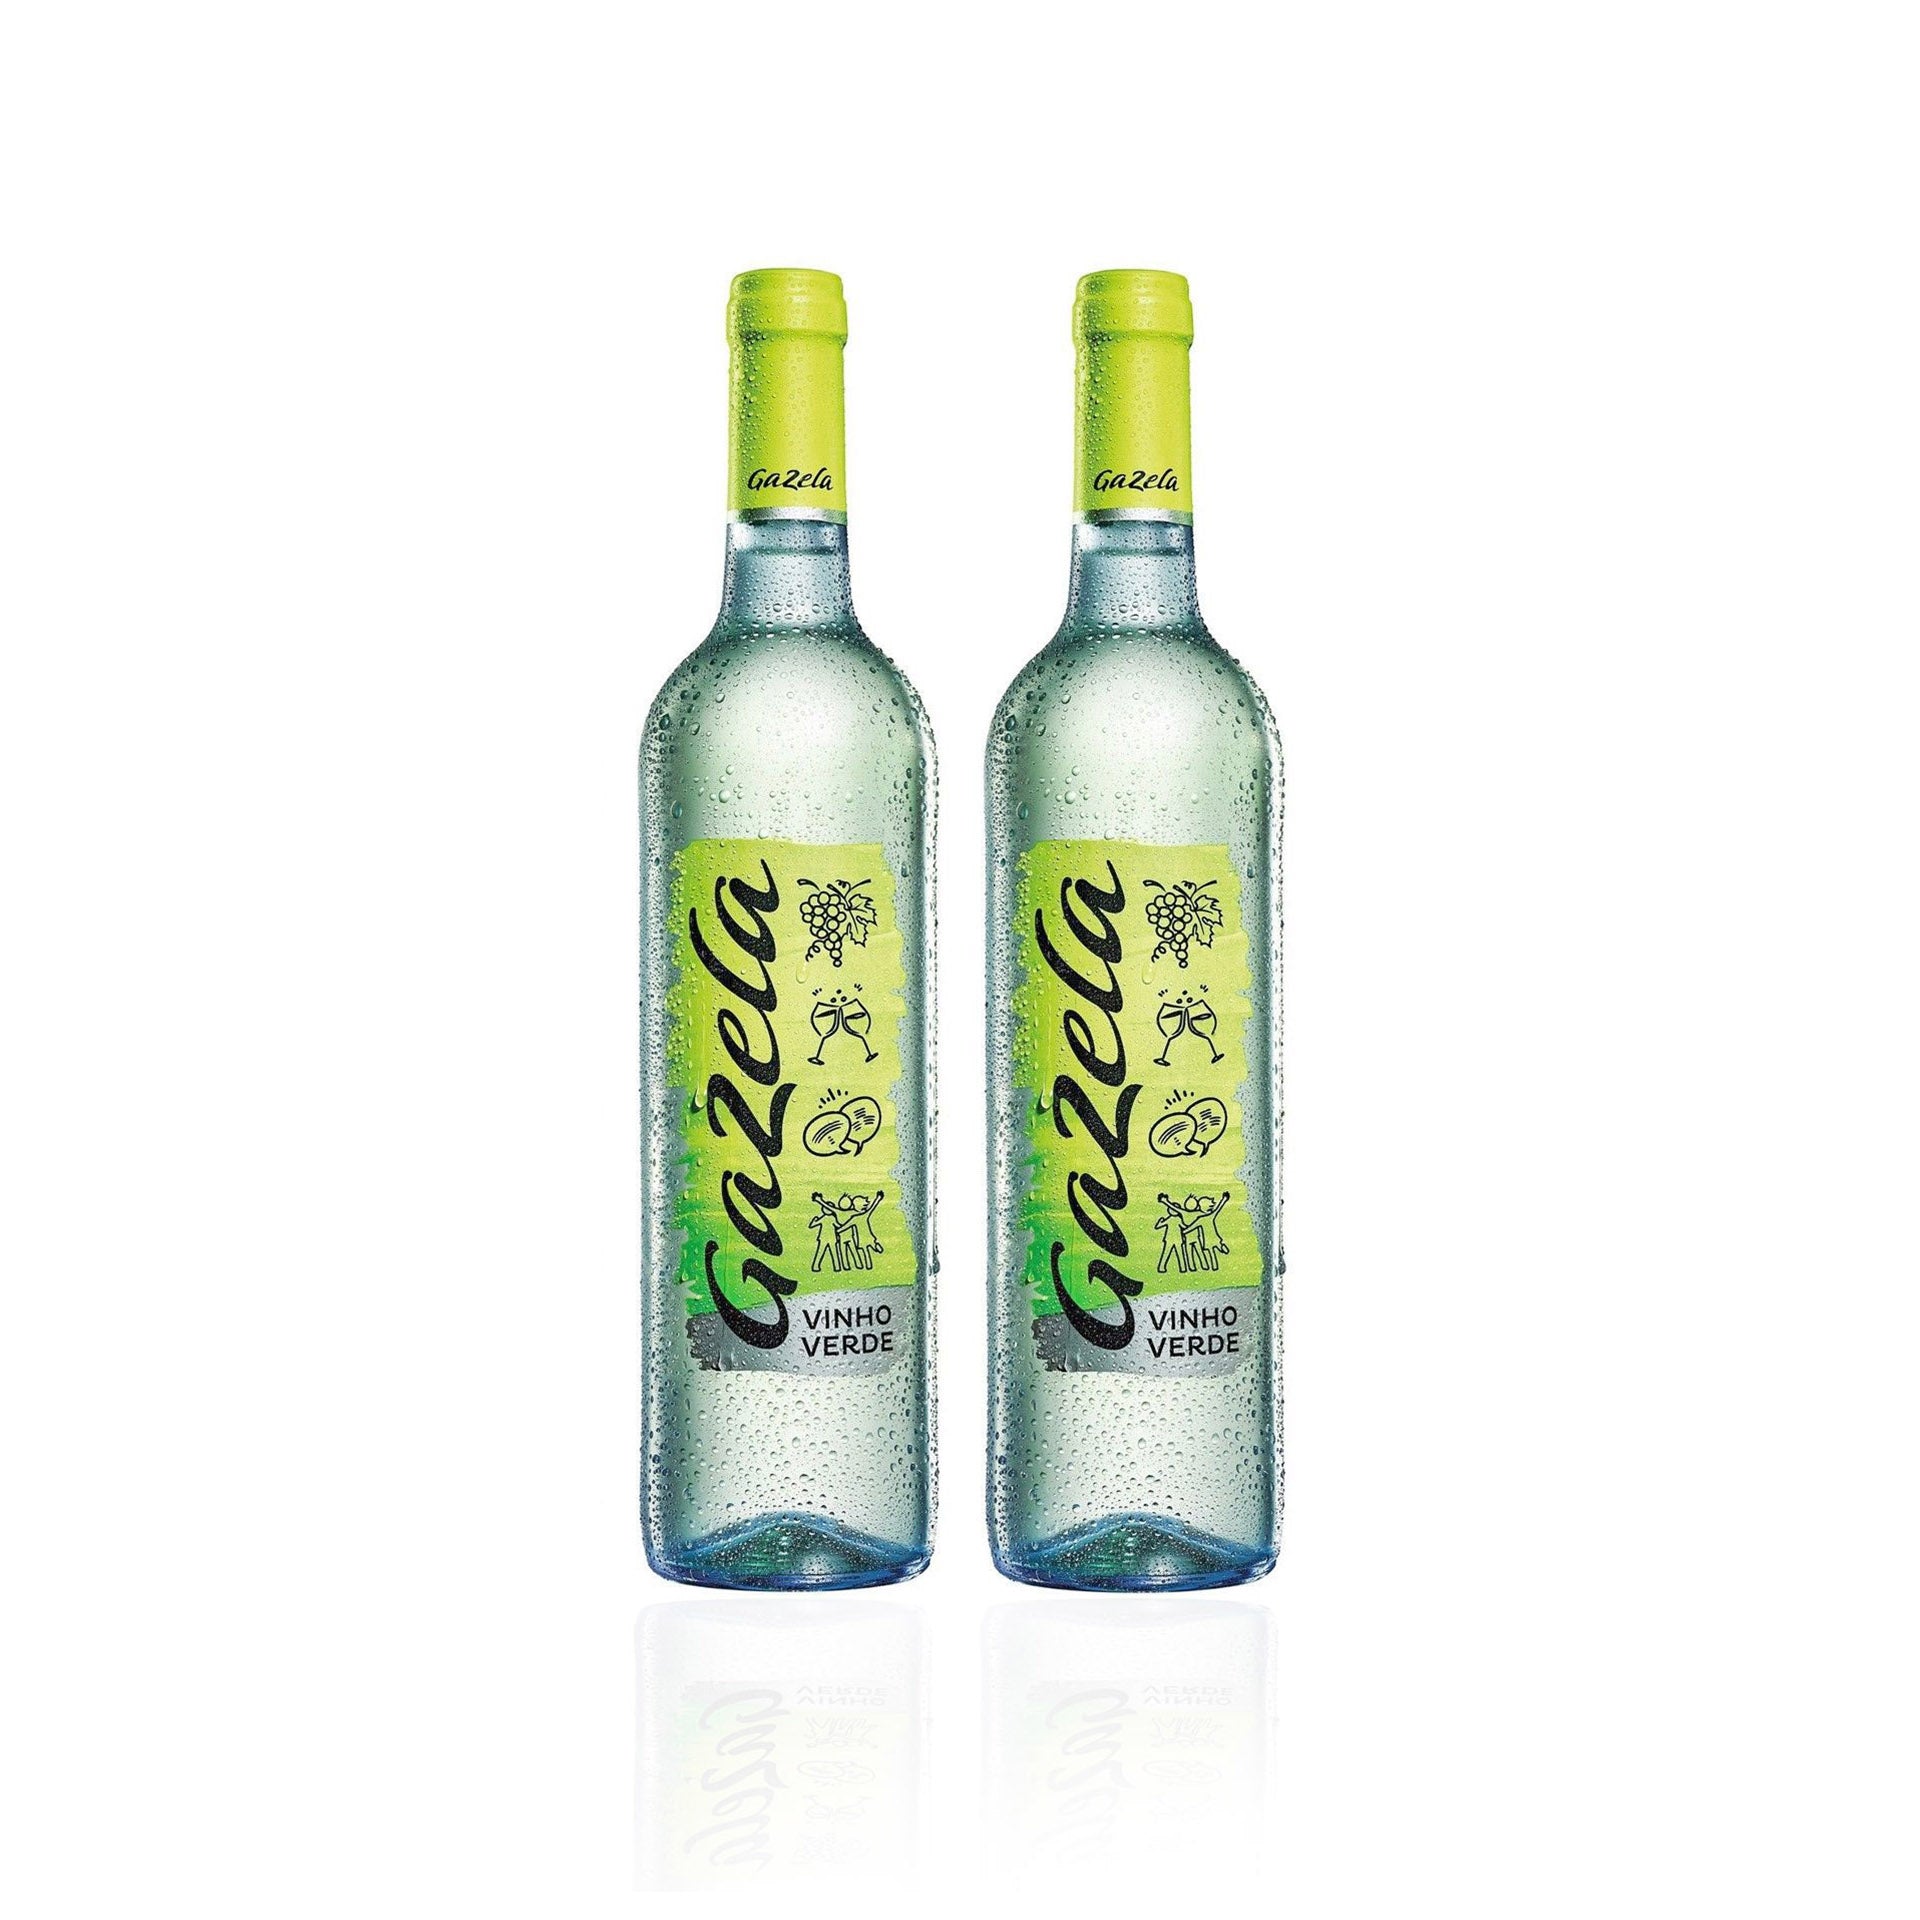 Vinho Verde Branco Gazela 75 cl - Pack 2 x 75 cl